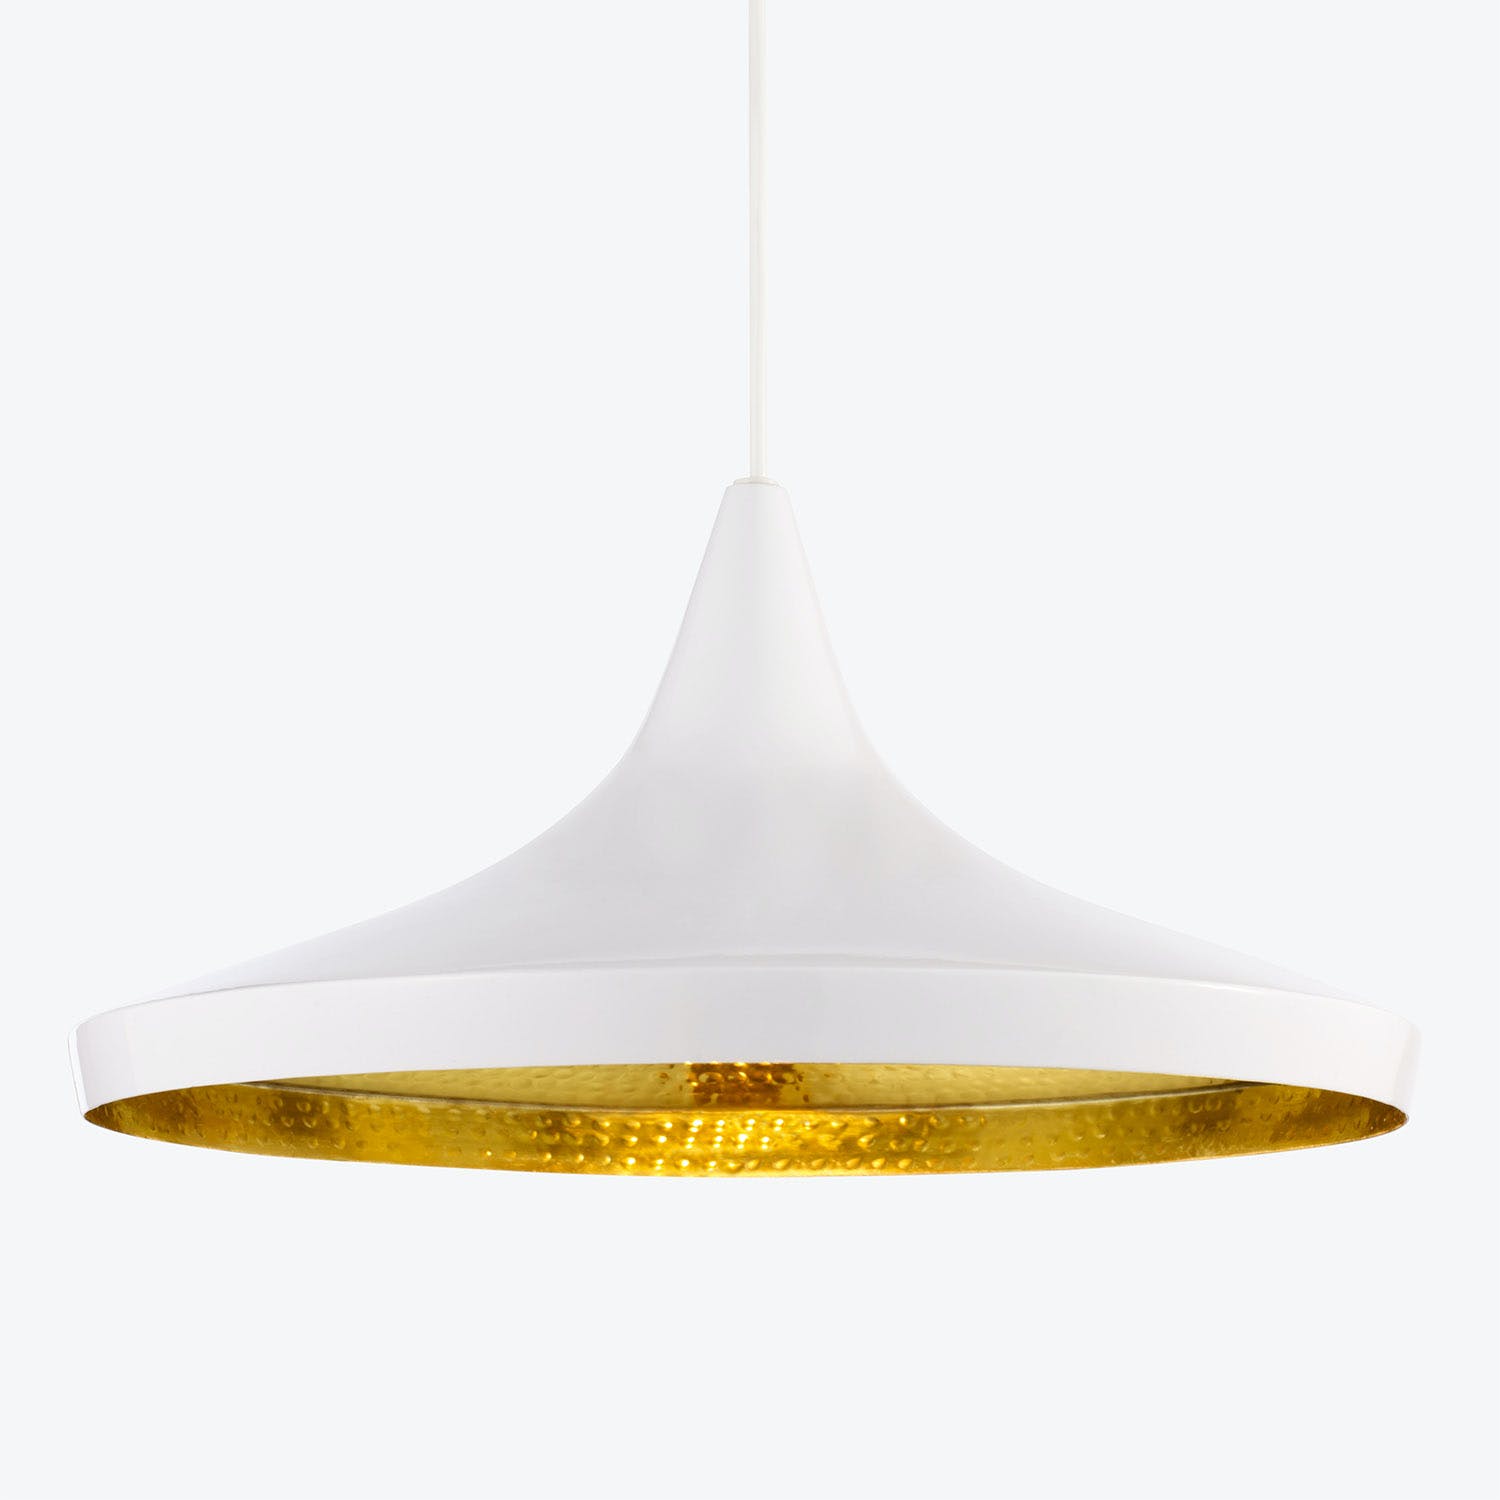 Modern pendant light with sleek white exterior and golden interior.